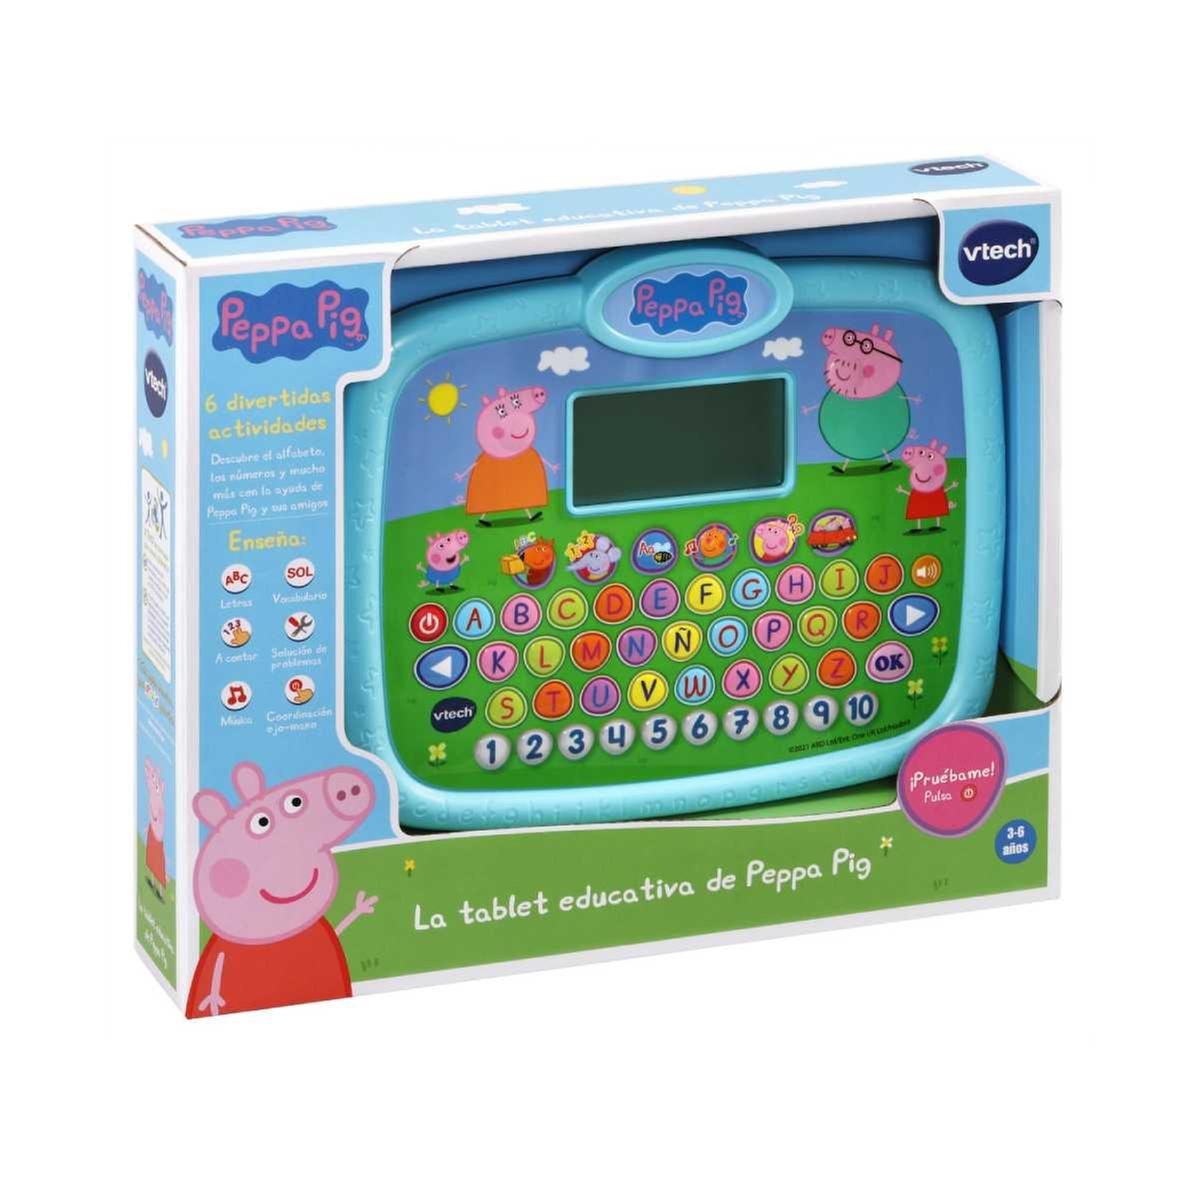 Vtech - Peppa Pig - Tablet educativa de Peppa Pig | Ela Preescolar |  Toys"R"Us España